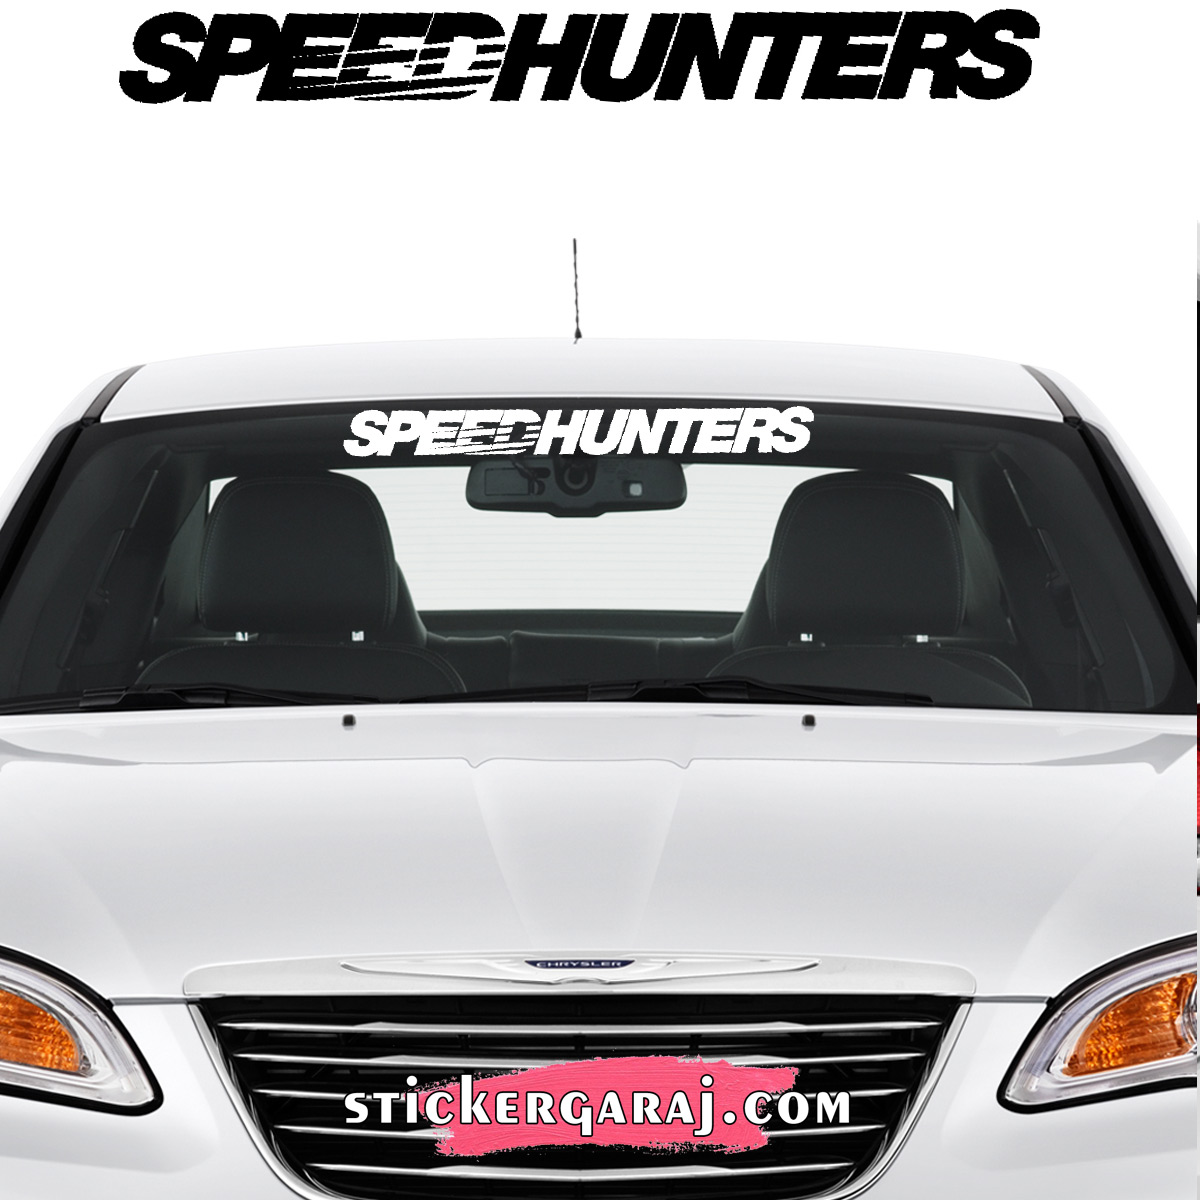 Kia oto sticker - Kia cam sticker - speedhunters